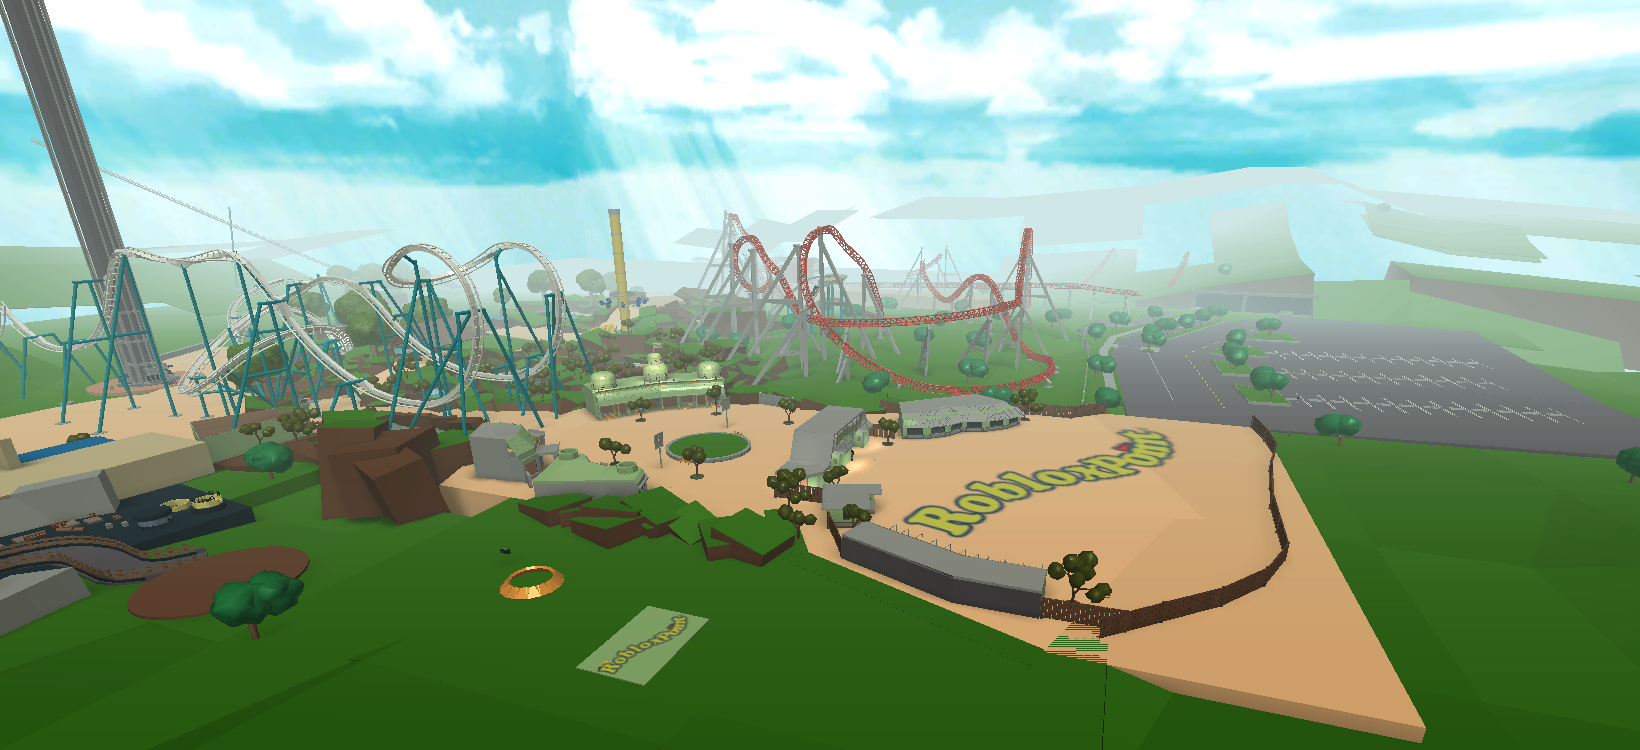 Spotlight Starmarine614 S Theme Park Success Story Roblox Blog - how to make a theme park in roblox